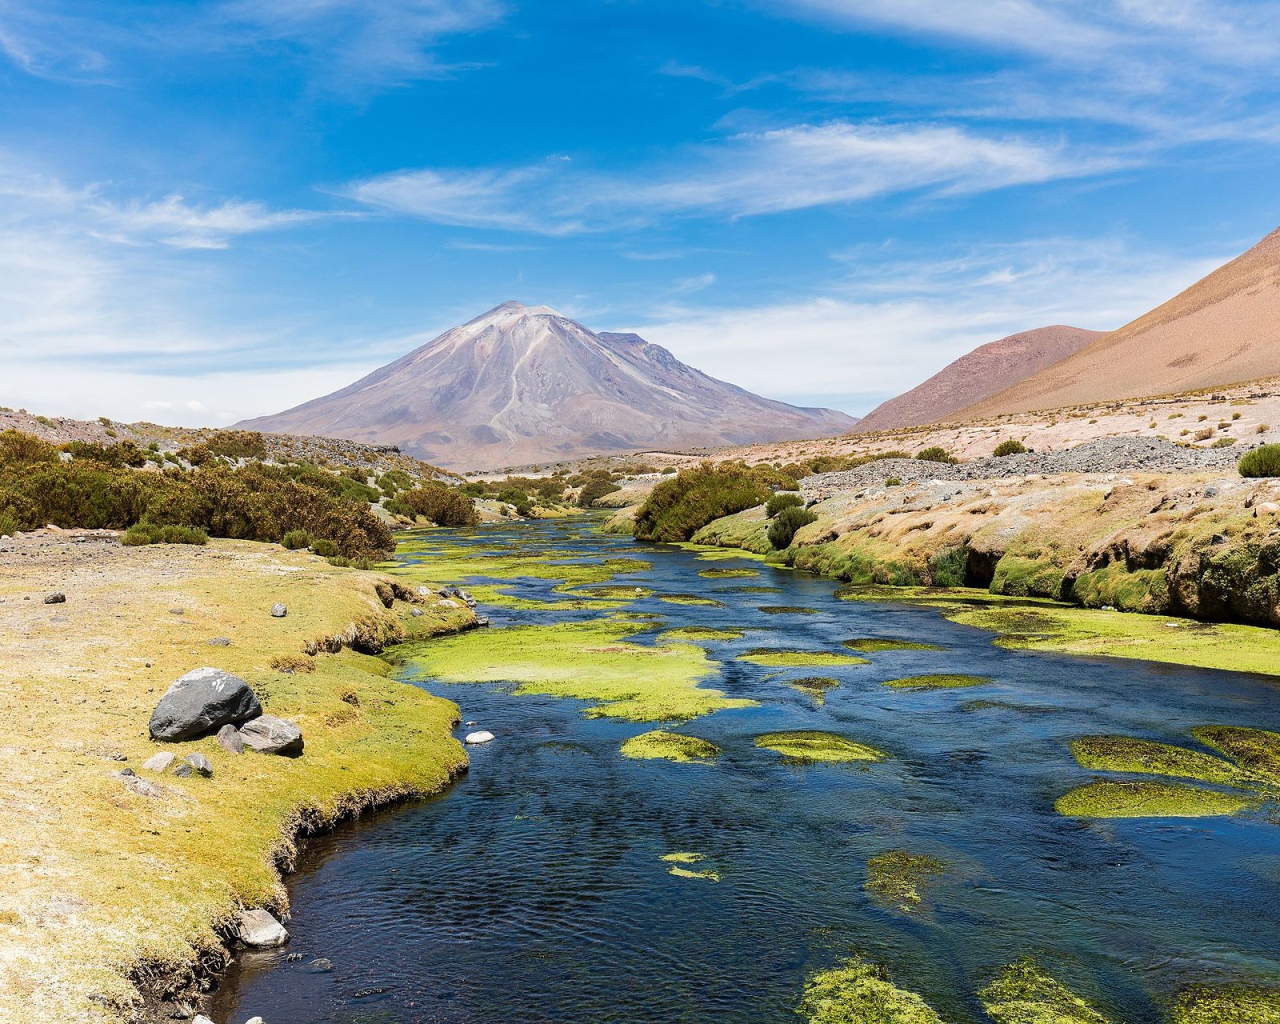 Cтратовулкан Панири и горная река на фоне голубого неба, Чили 